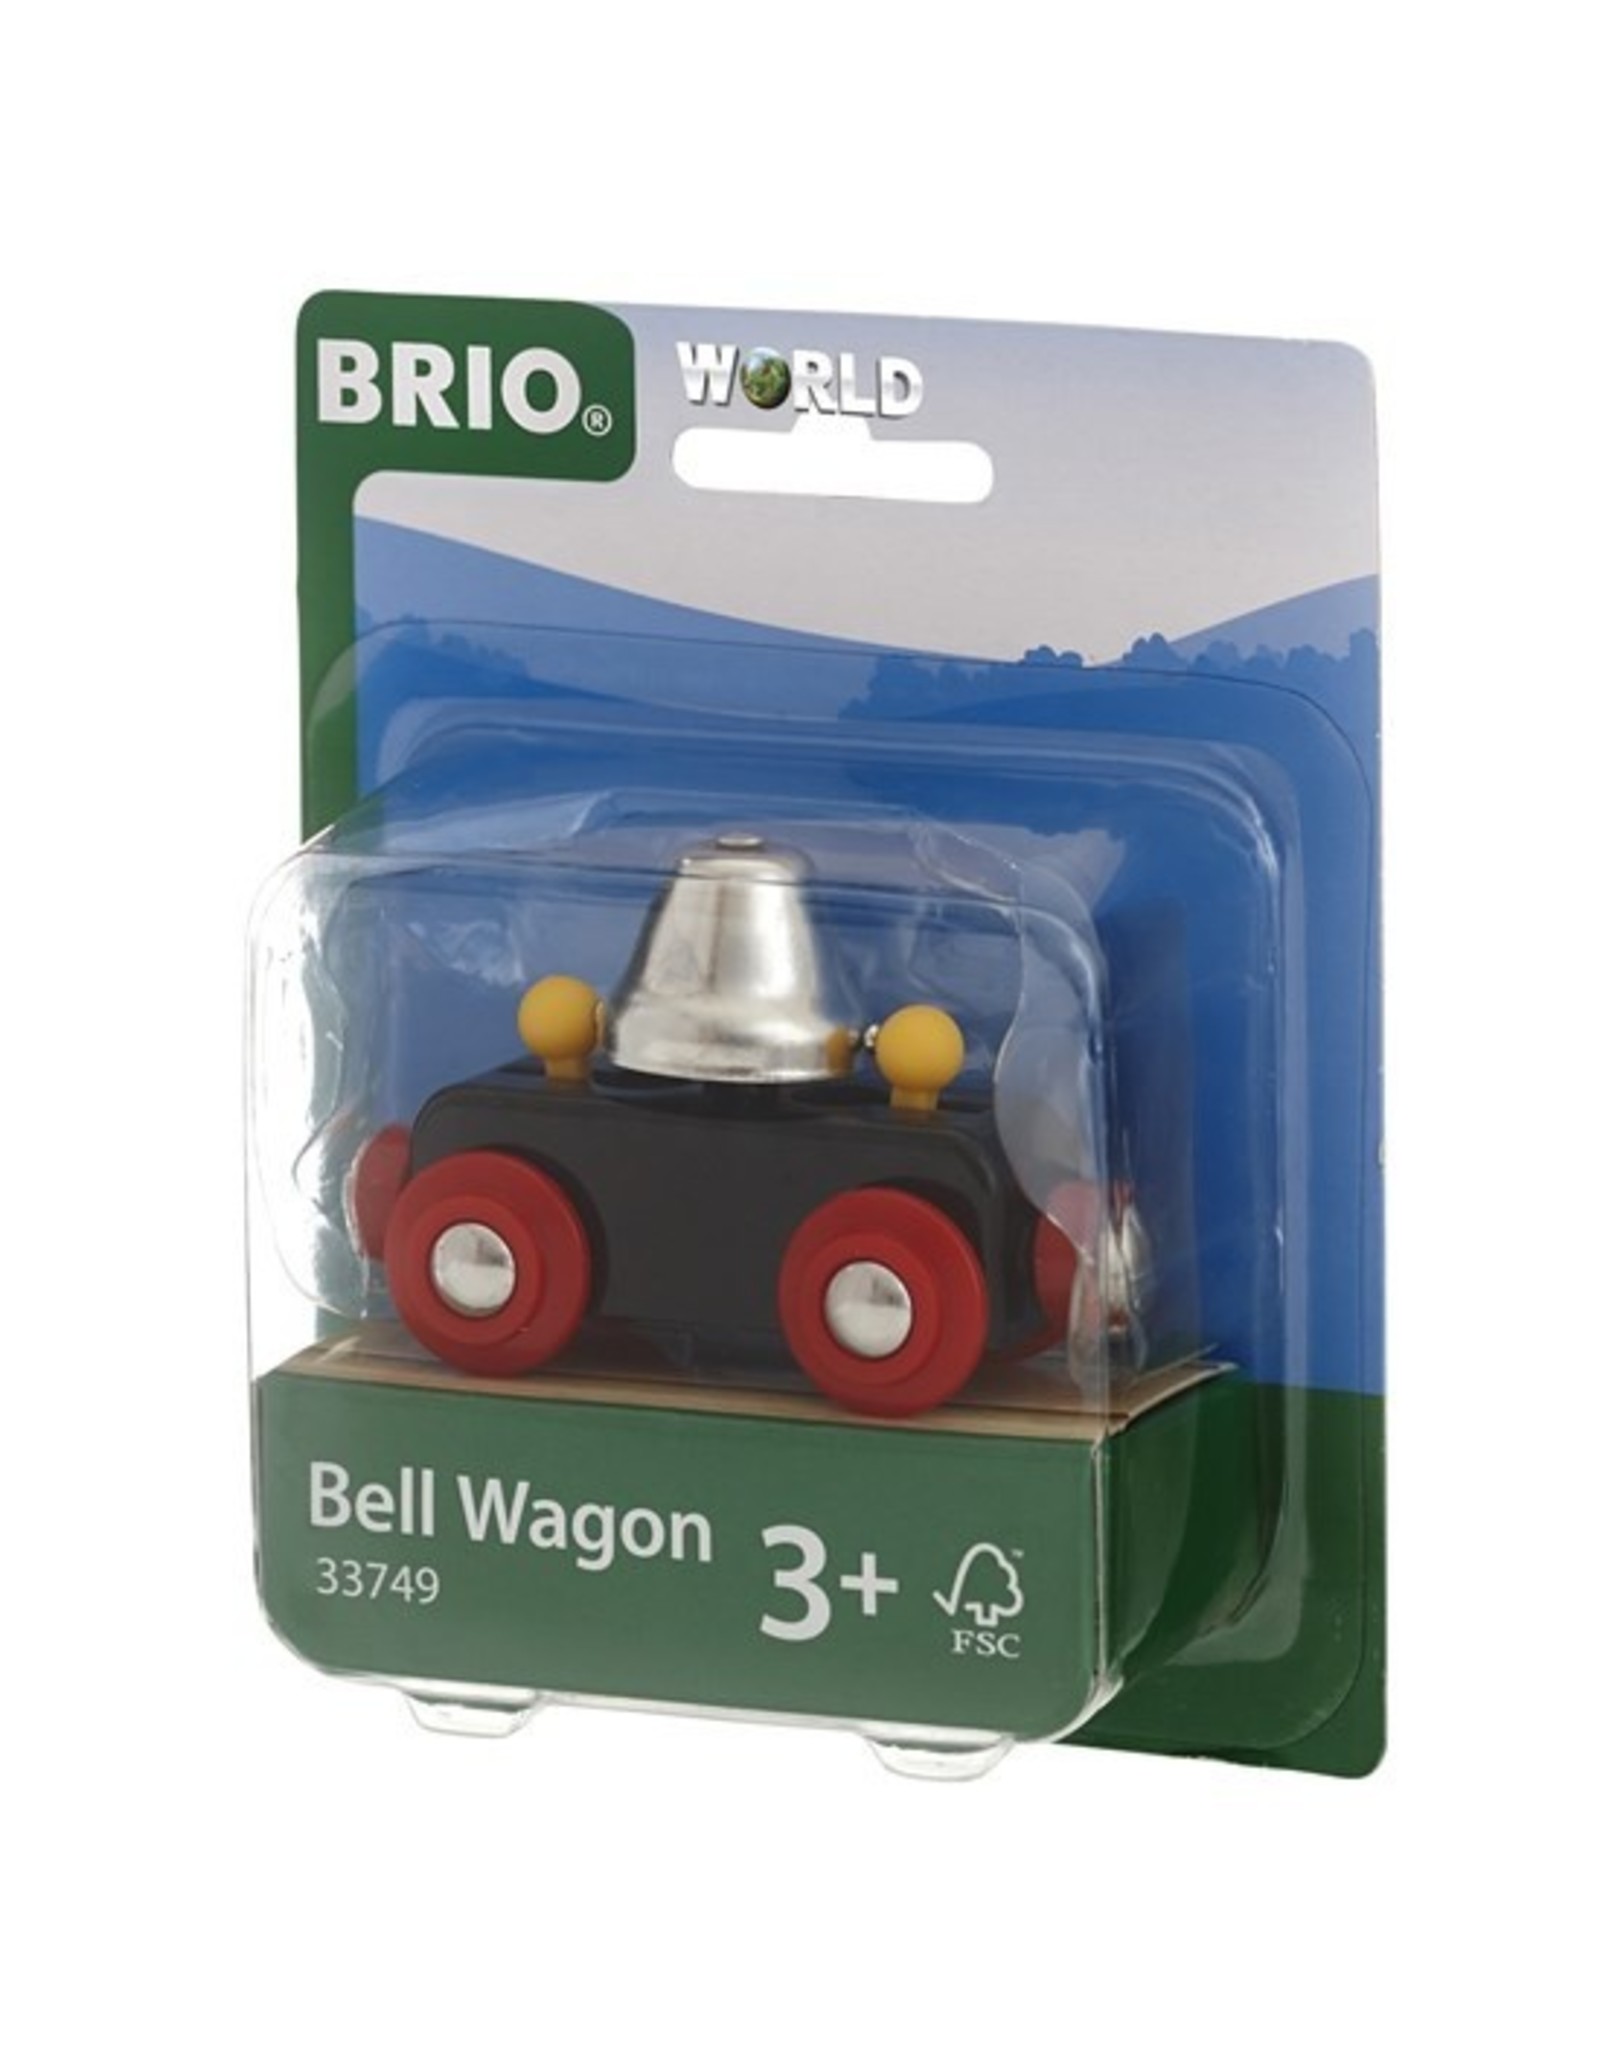 Ravensburger BRIO Bell Wagon